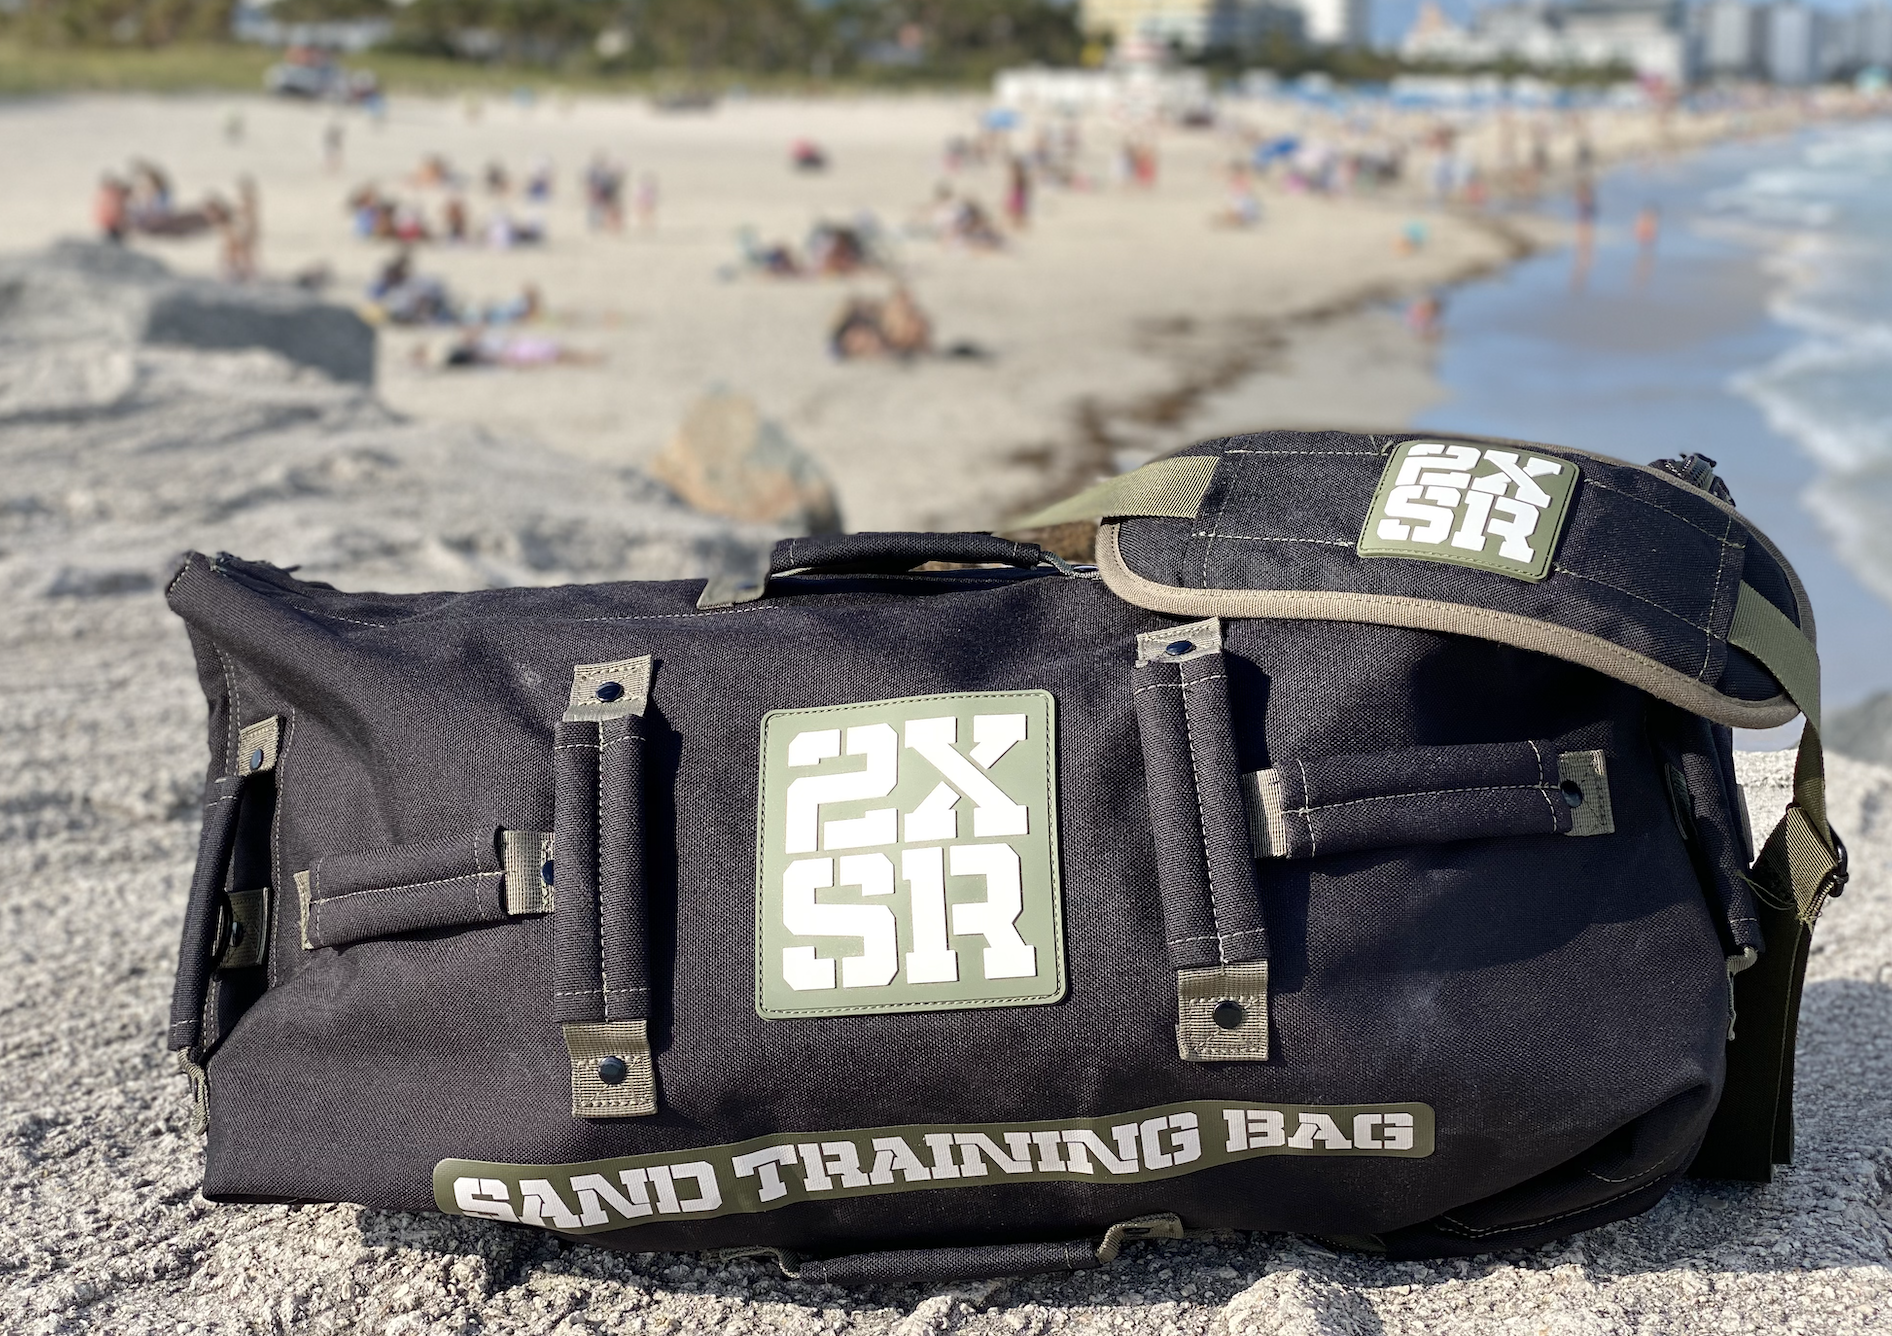 Sand Training Bag